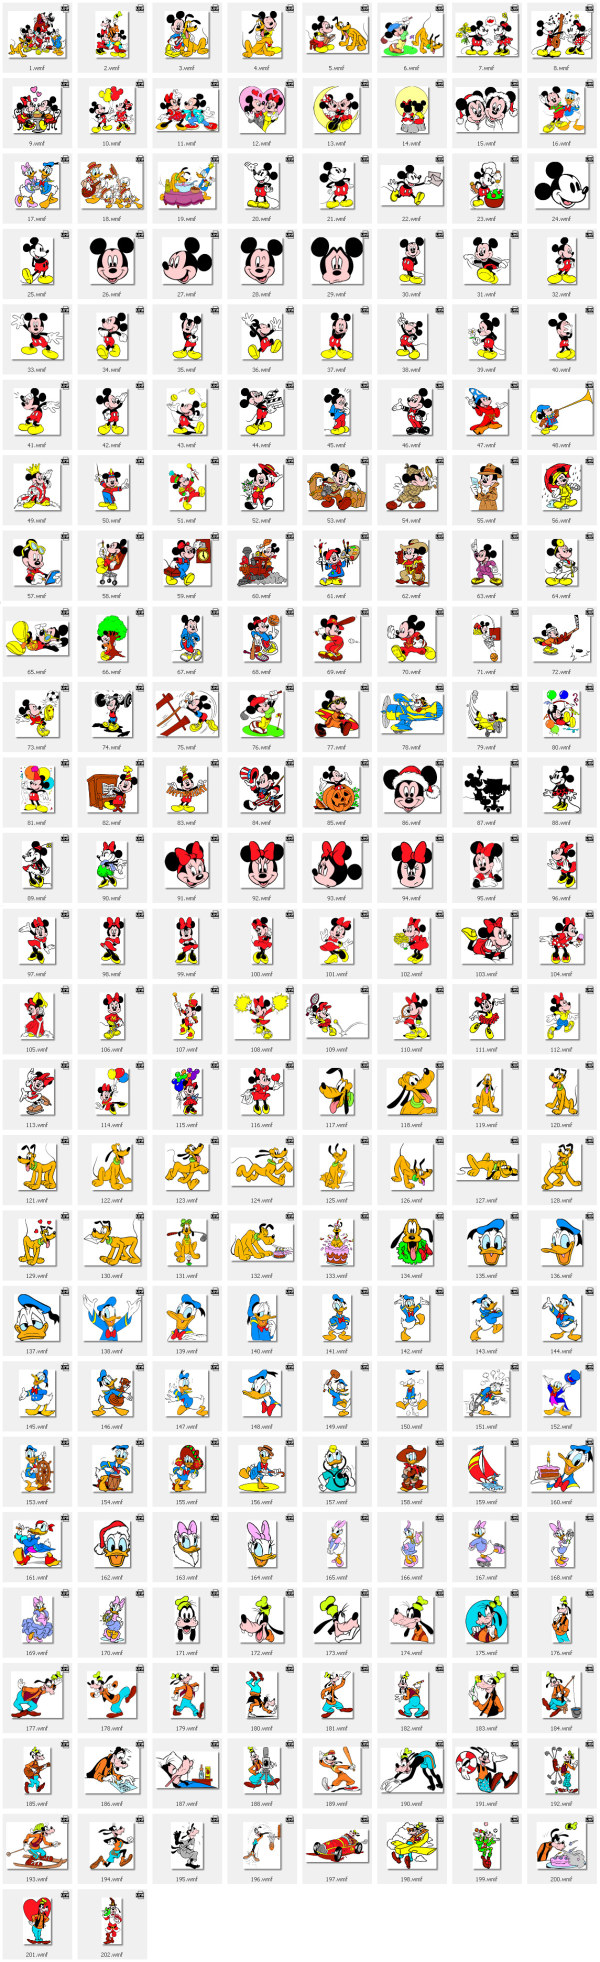 Disney, Micky Maus, Donald Duck, Mickey Mouse, Minnie, Pluto